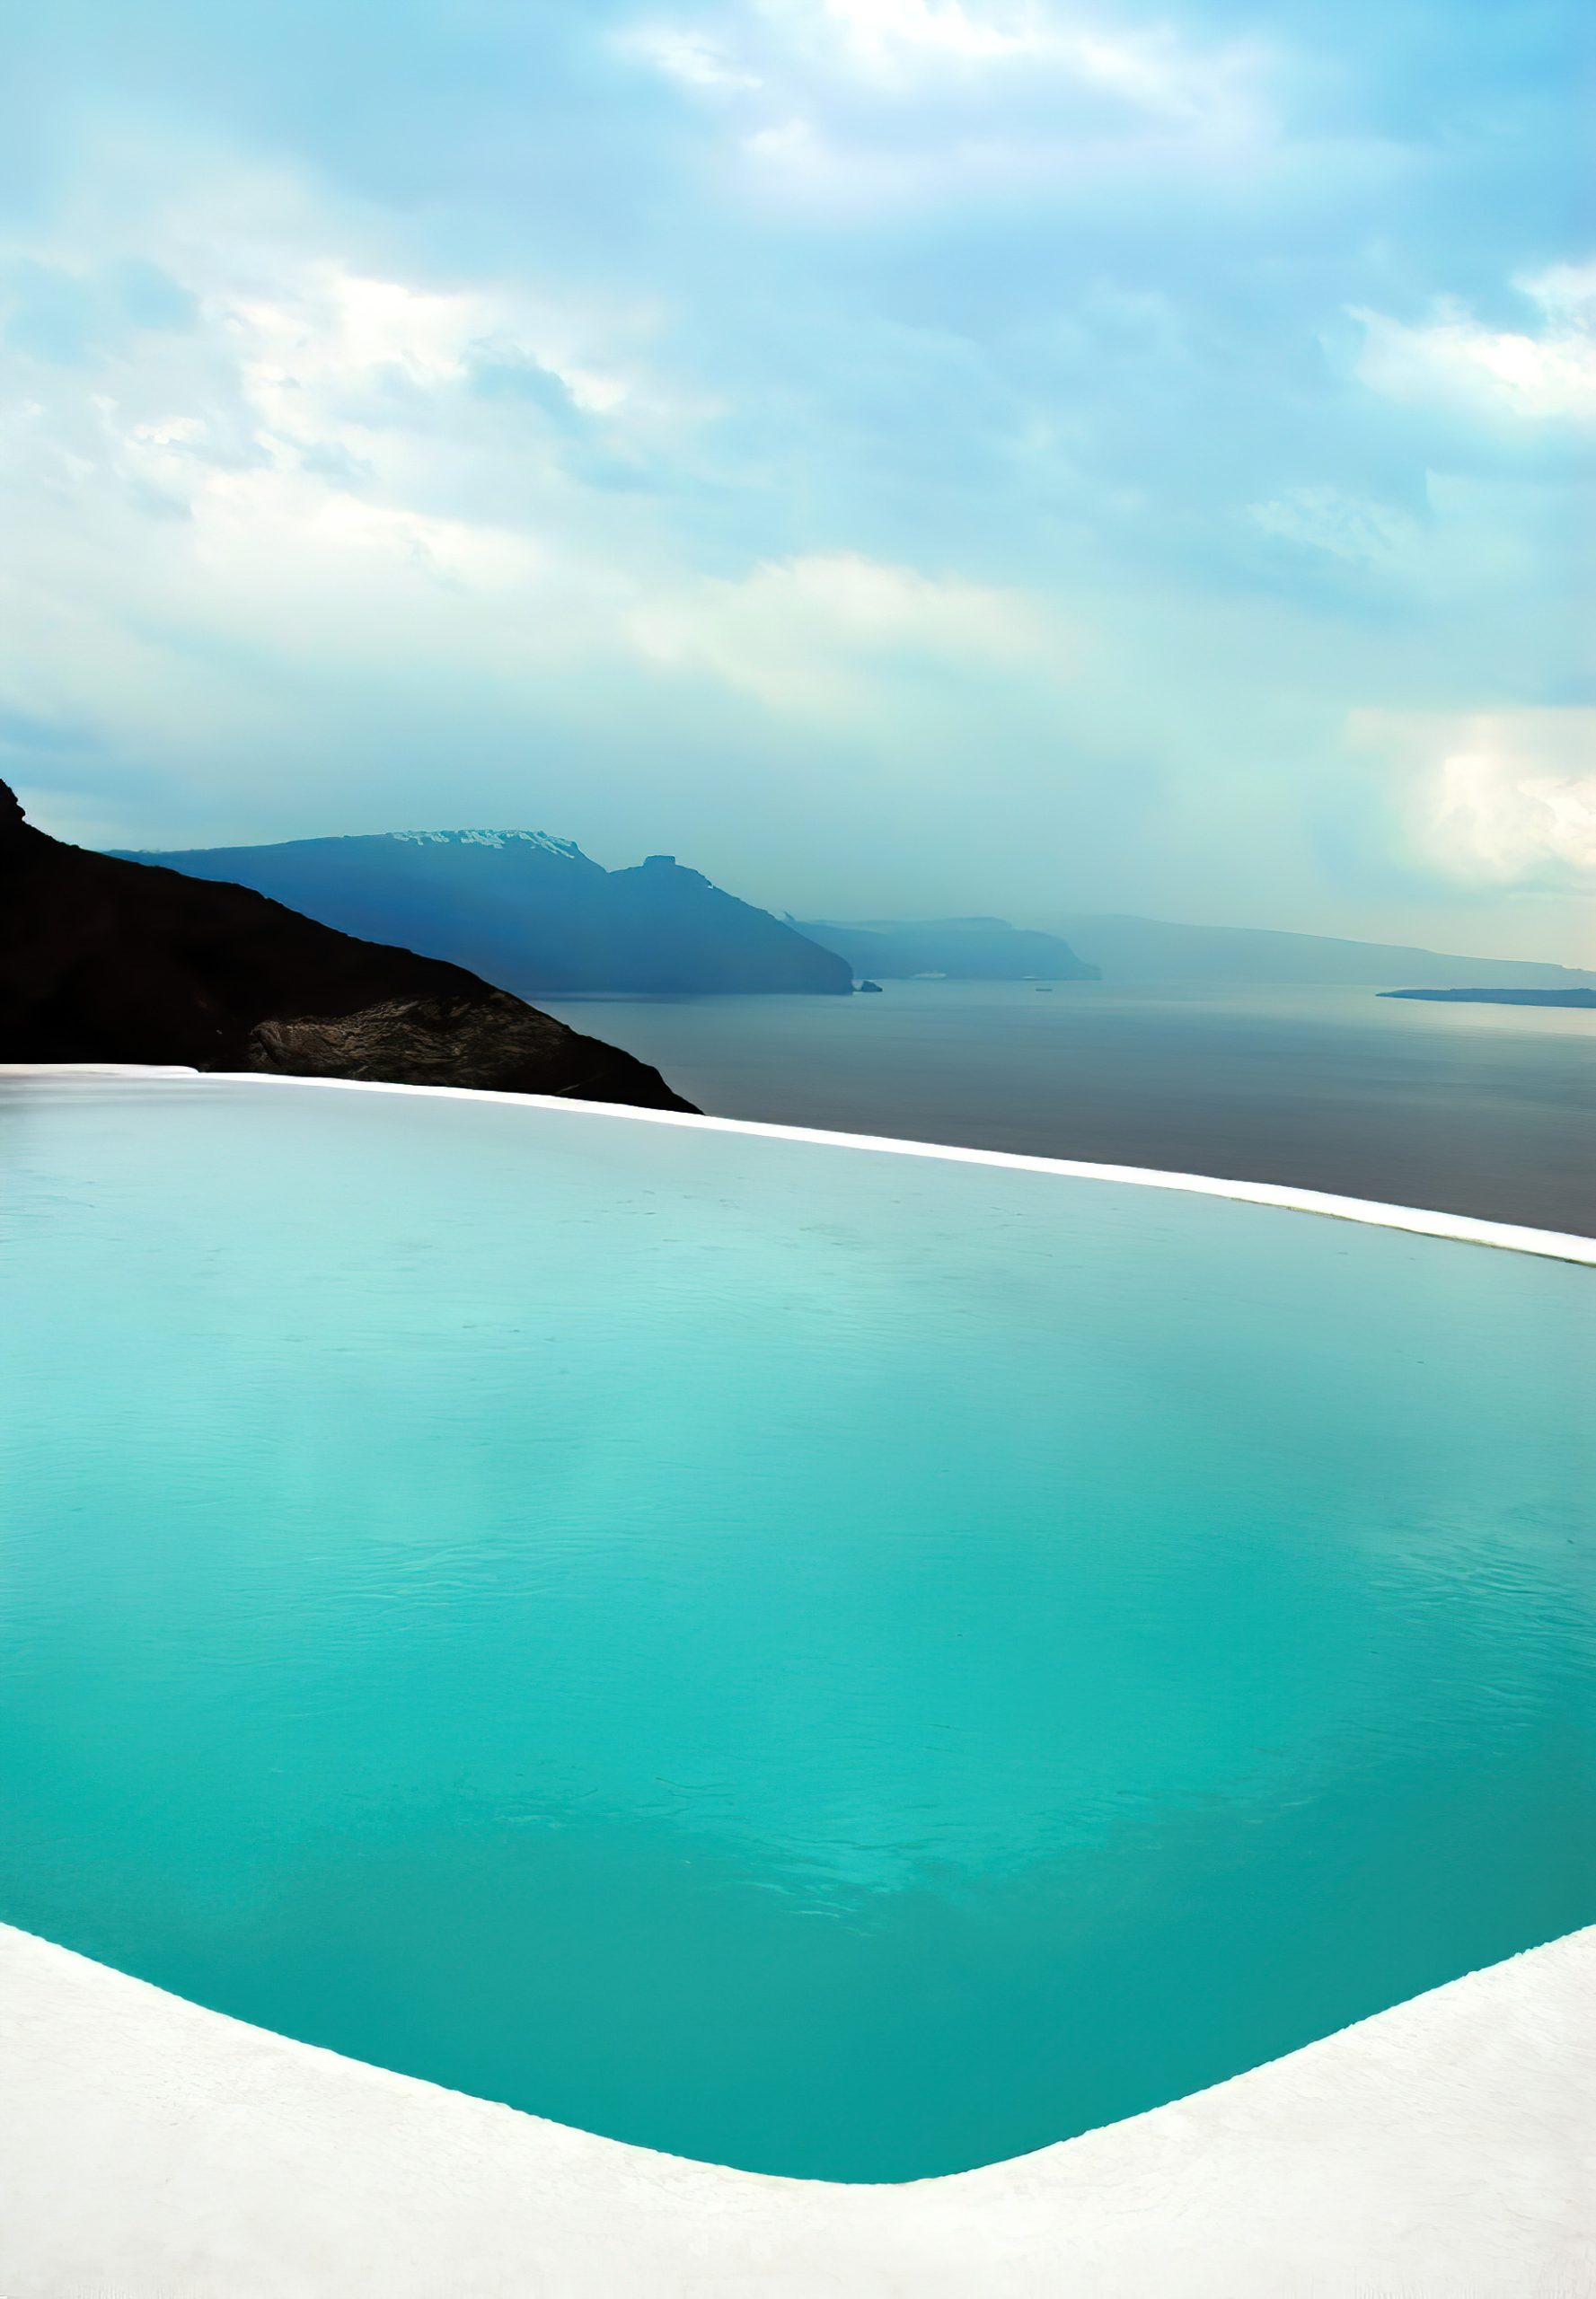 Mystique Hotel Santorini – Oia, Santorini Island, Greece – Clifftop Infinity Pool View